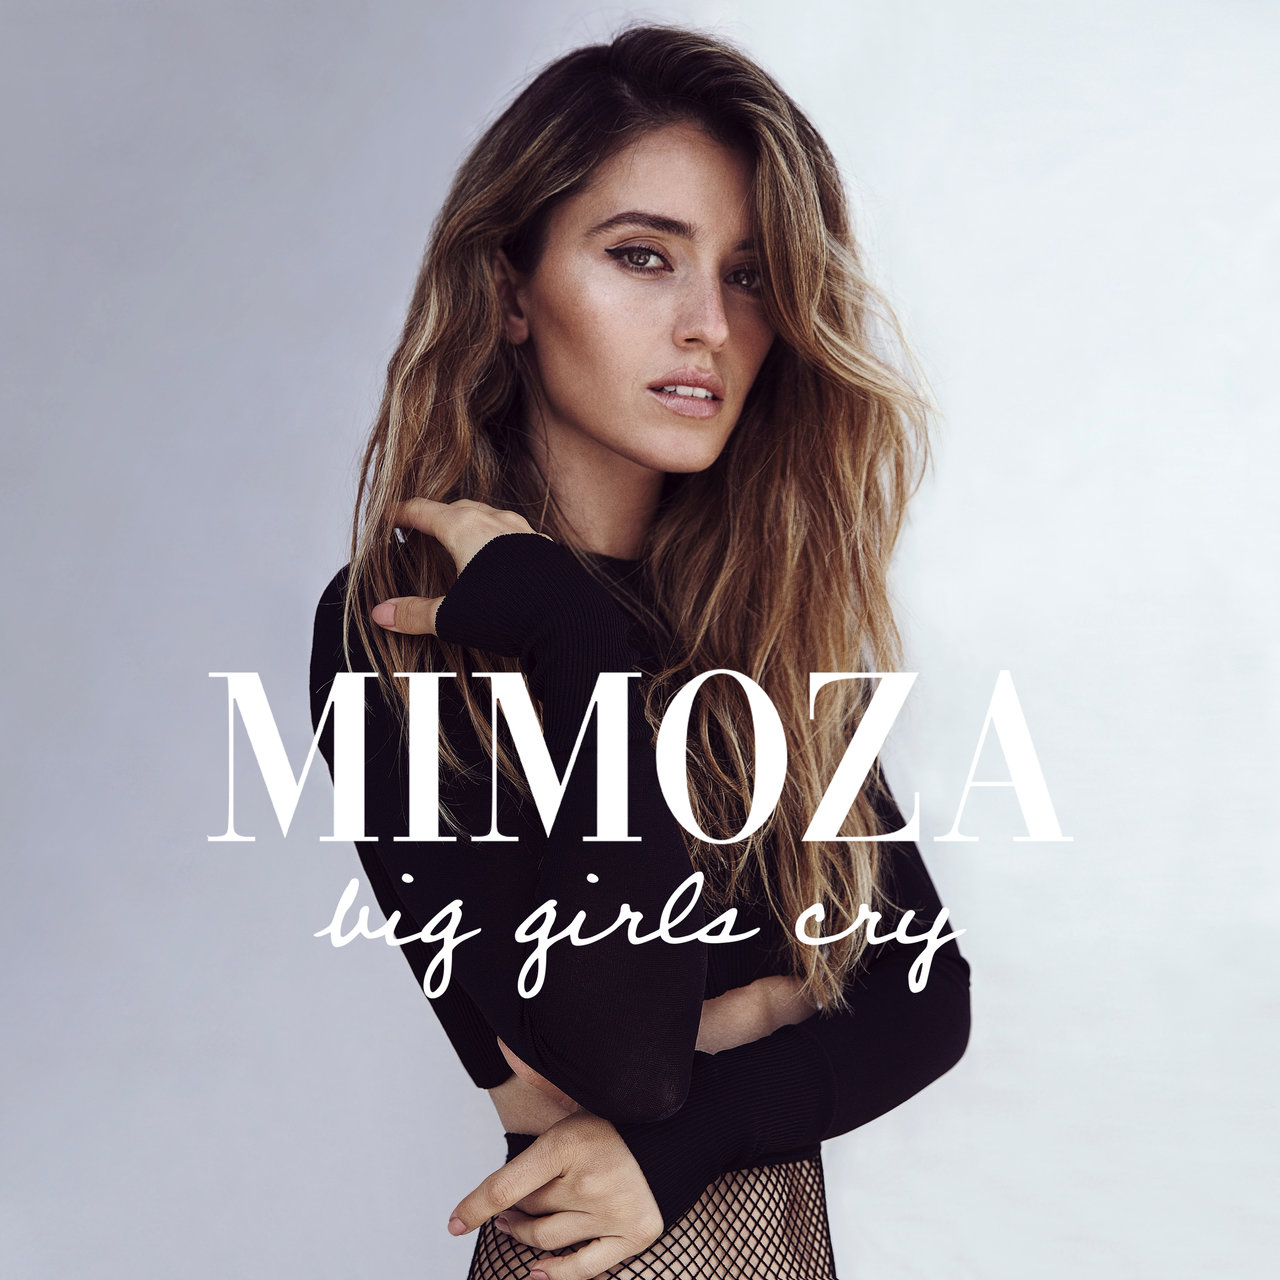 Mimoza — Big Girls Cry cover artwork